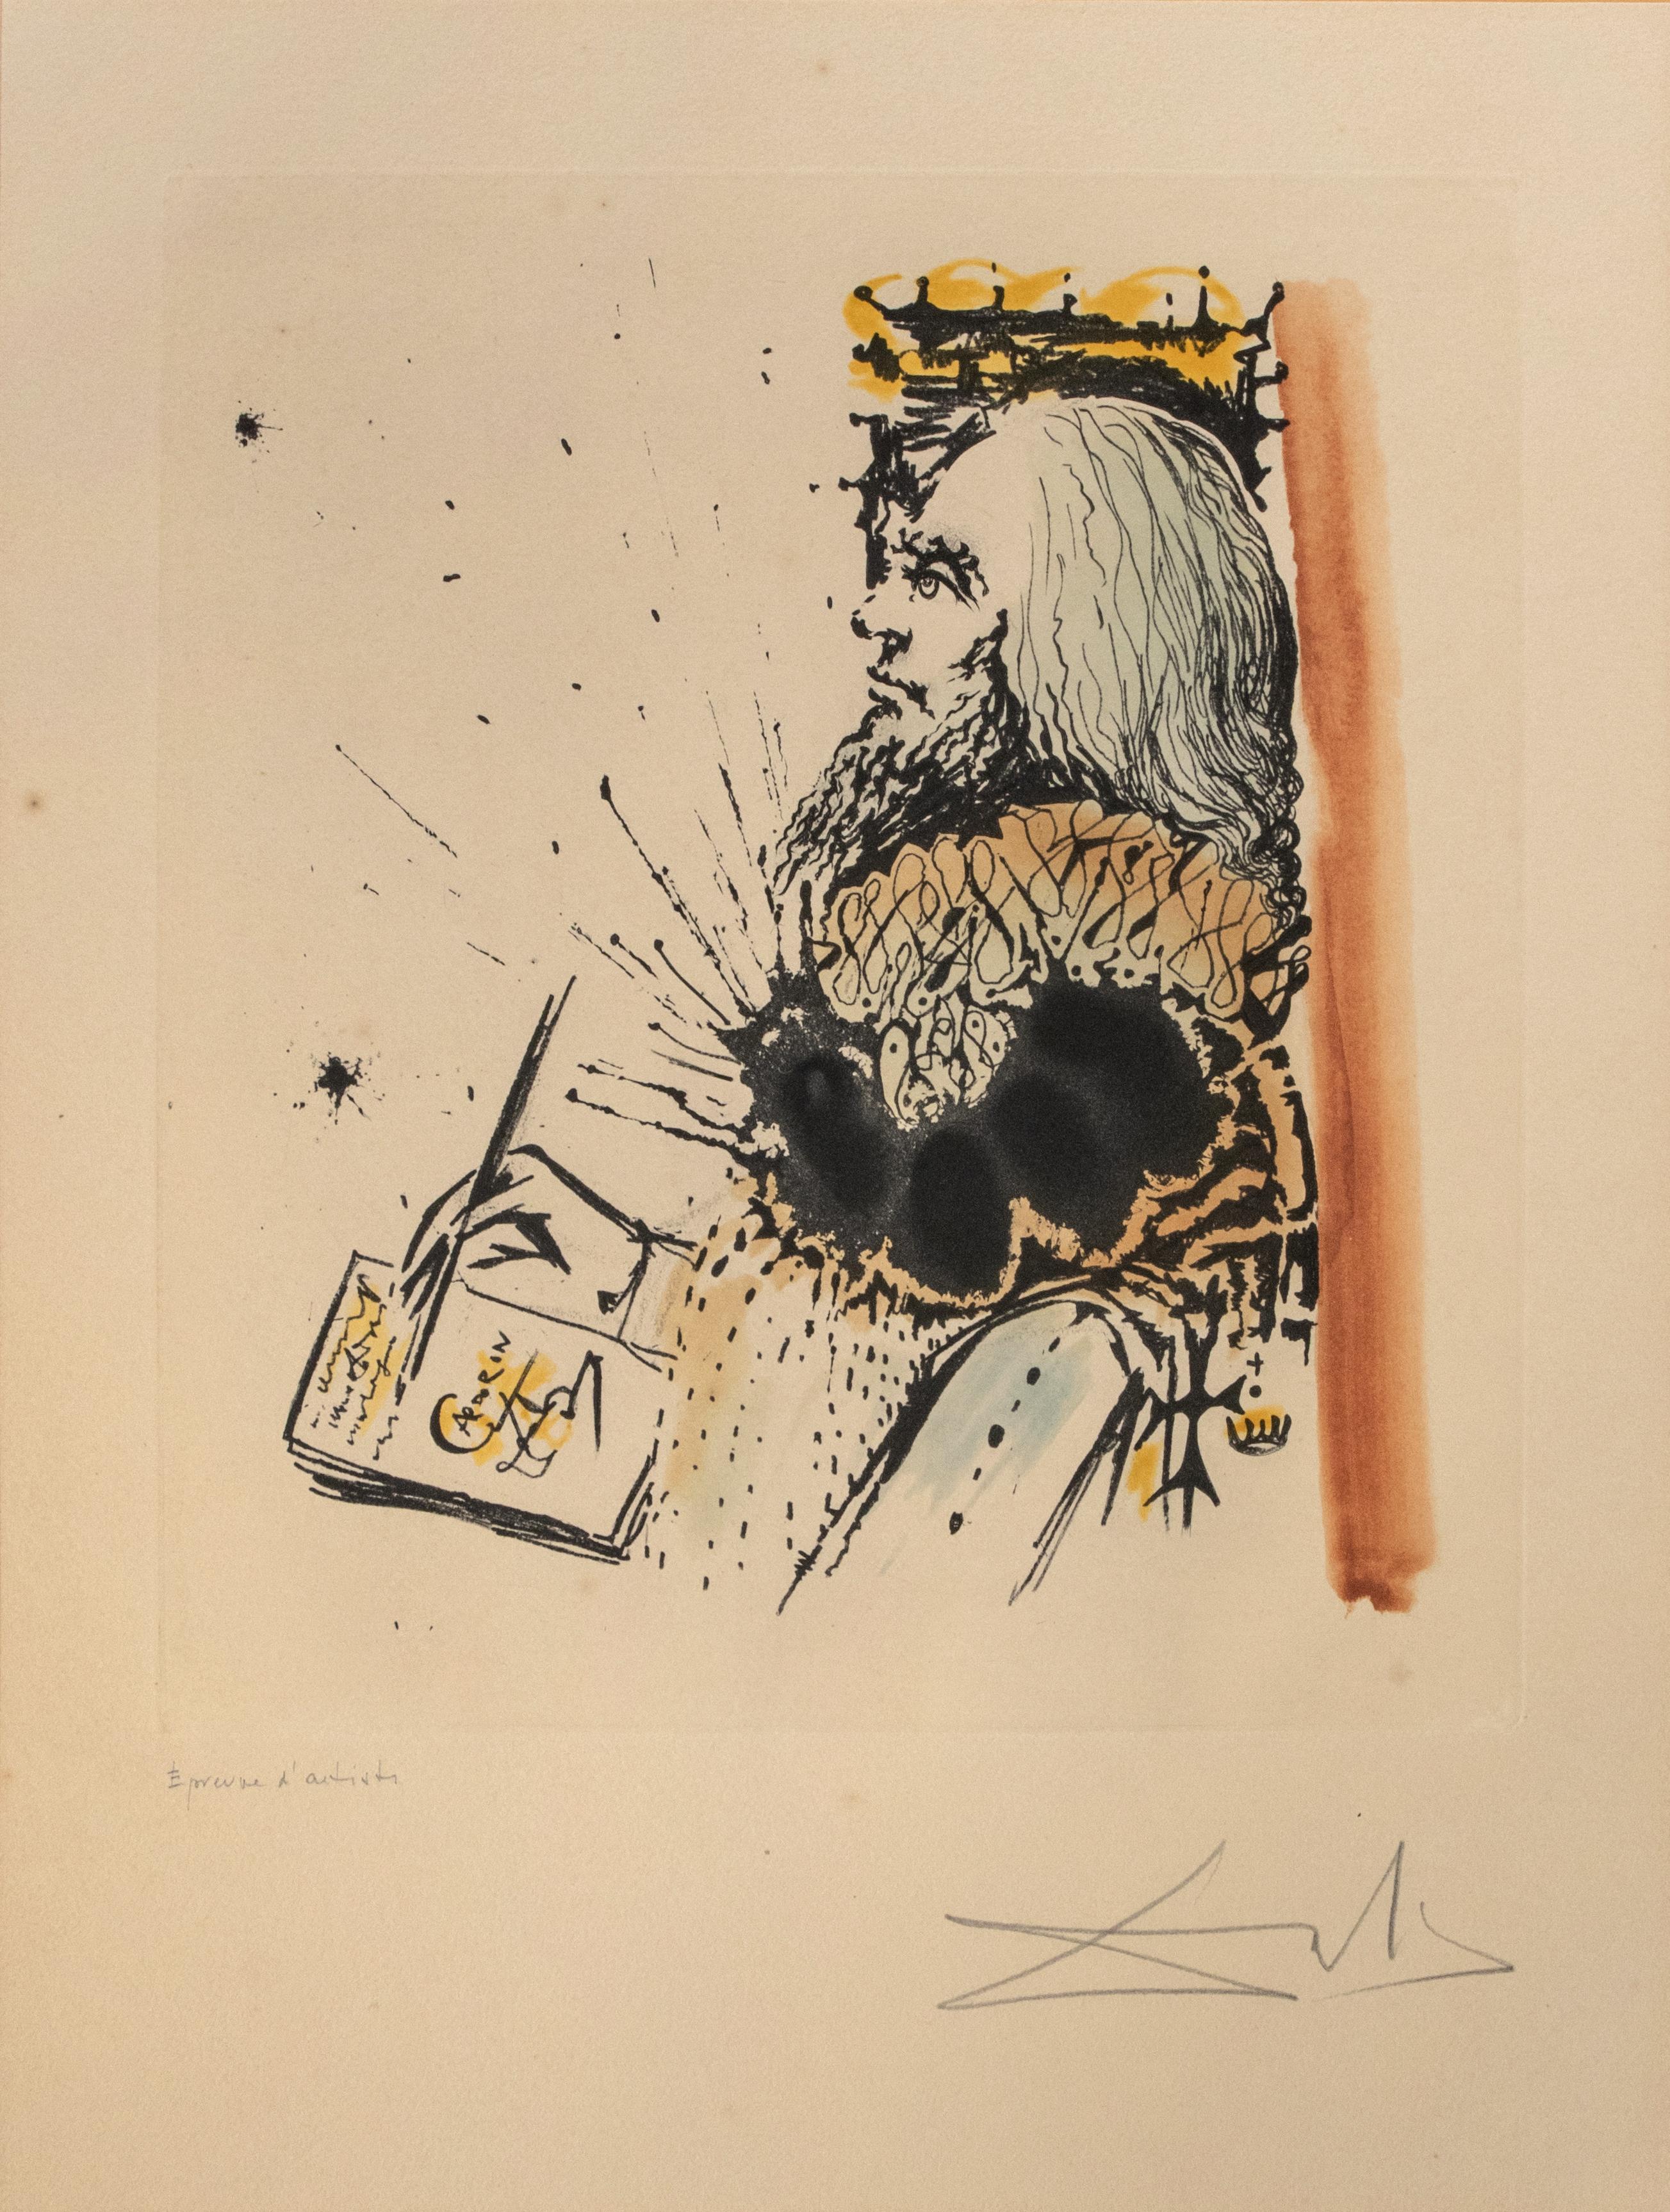 Portrait de Calderon - Aquatinta und Radierung nach Salvador Dalì - 1971